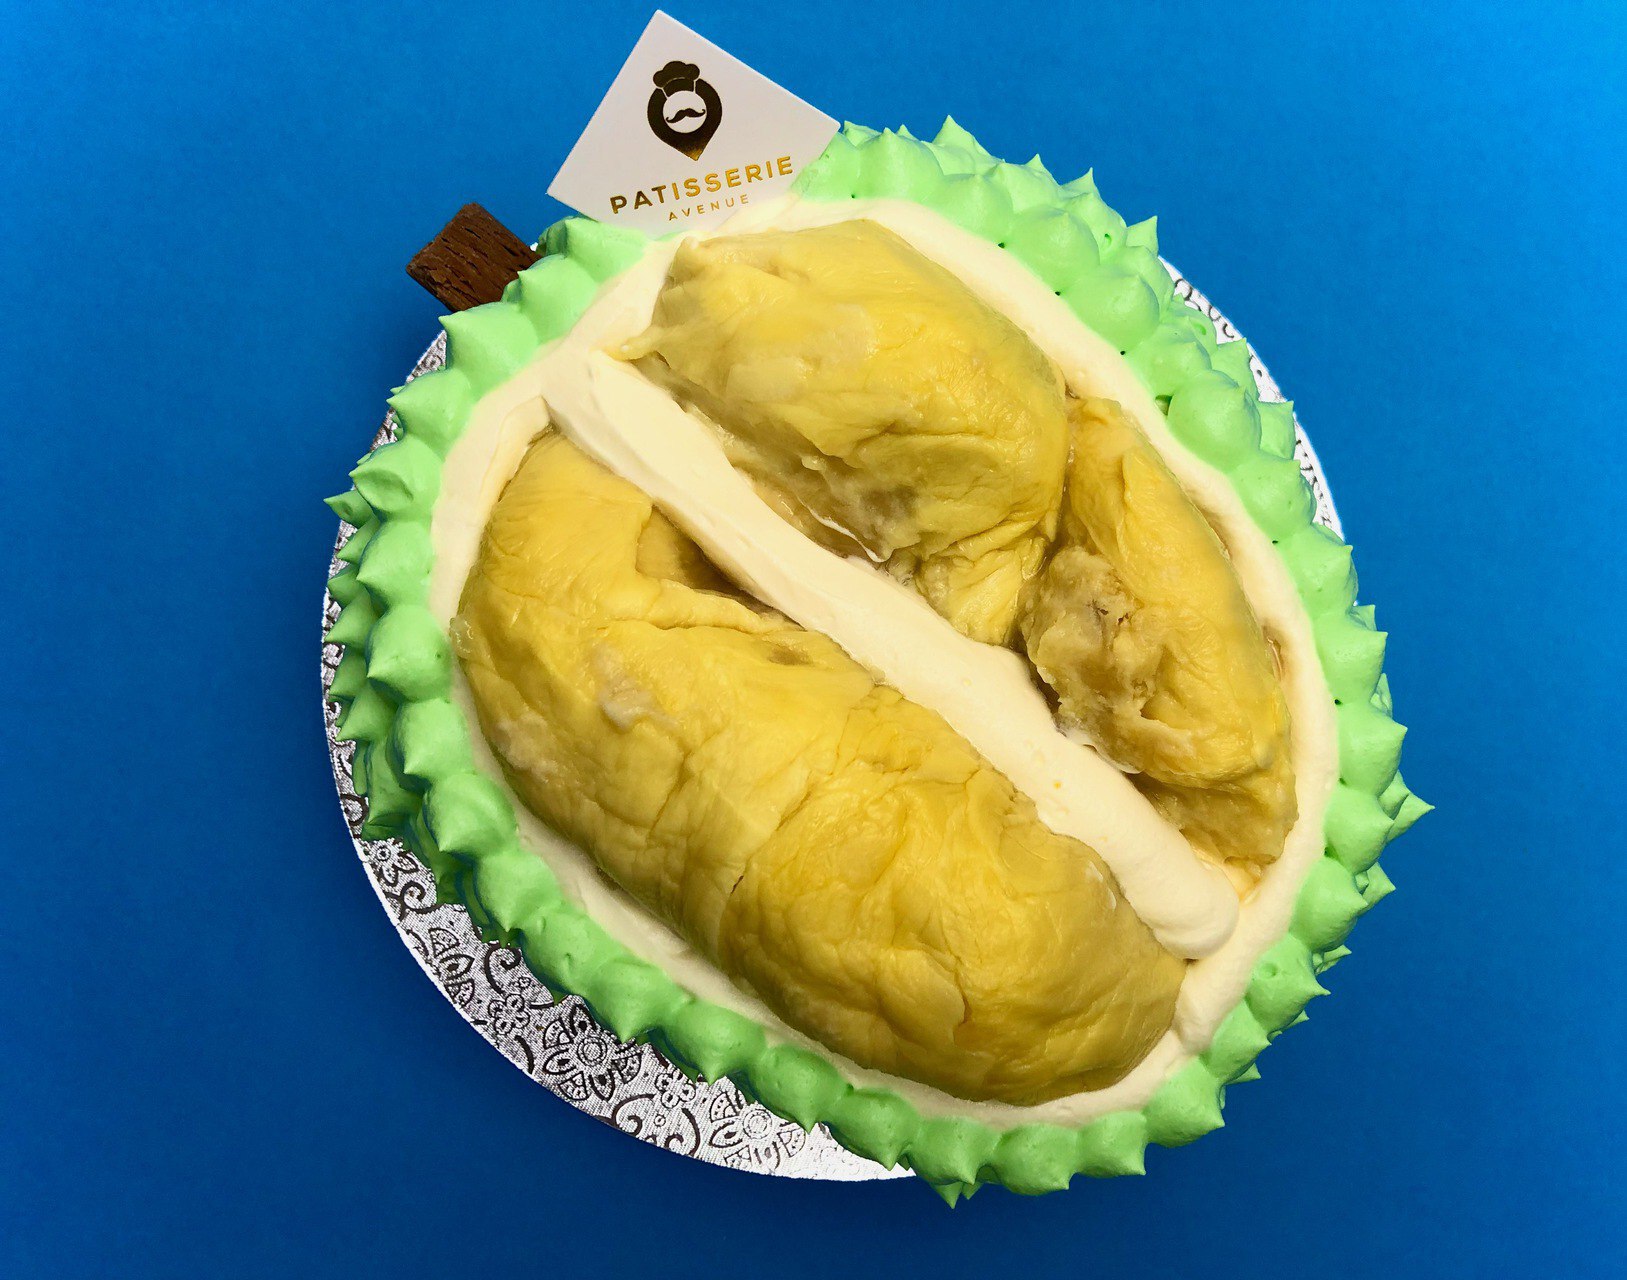 3D Durian Cake